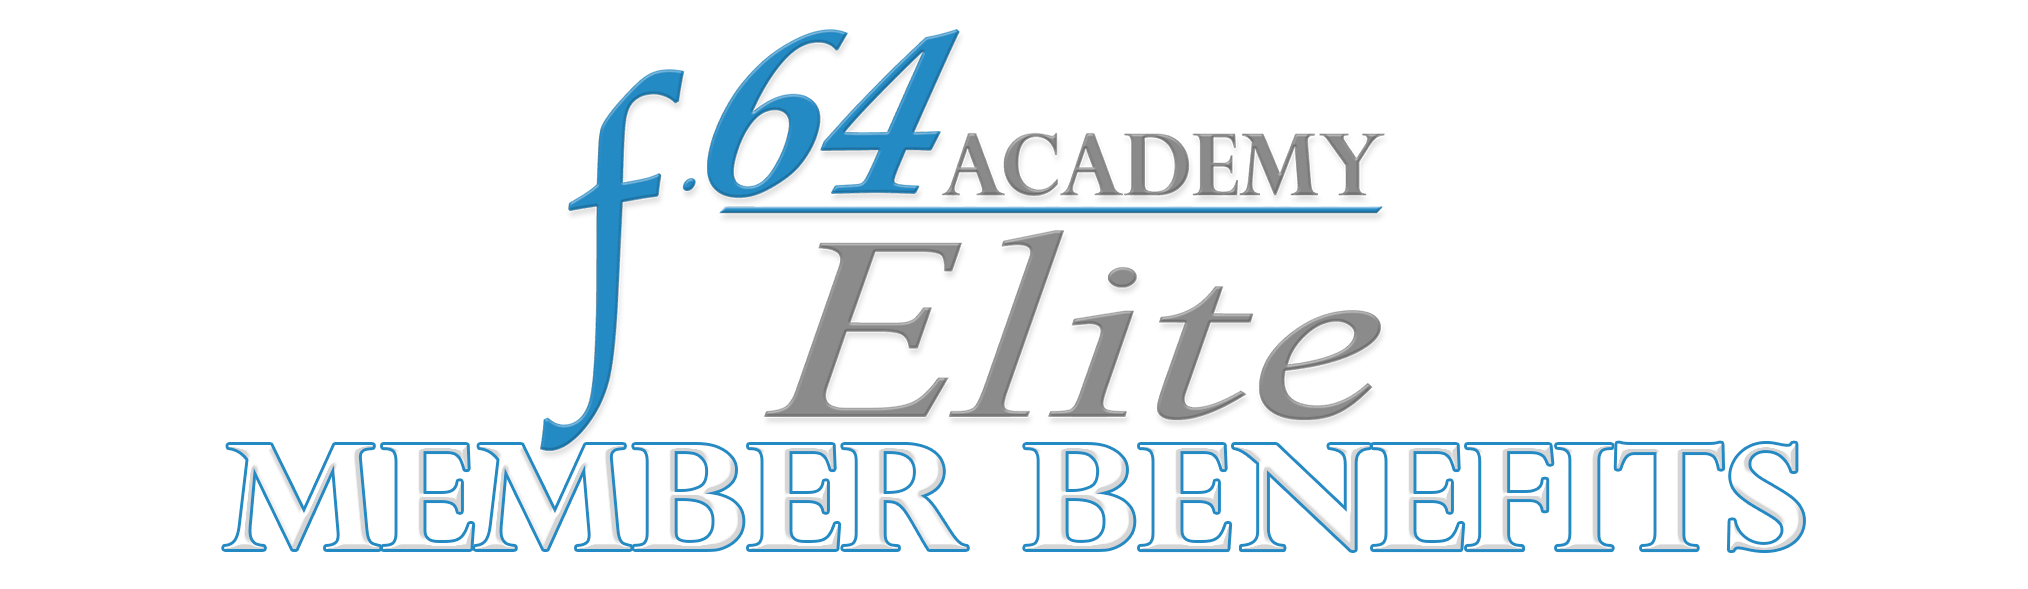 64 elite member benefits